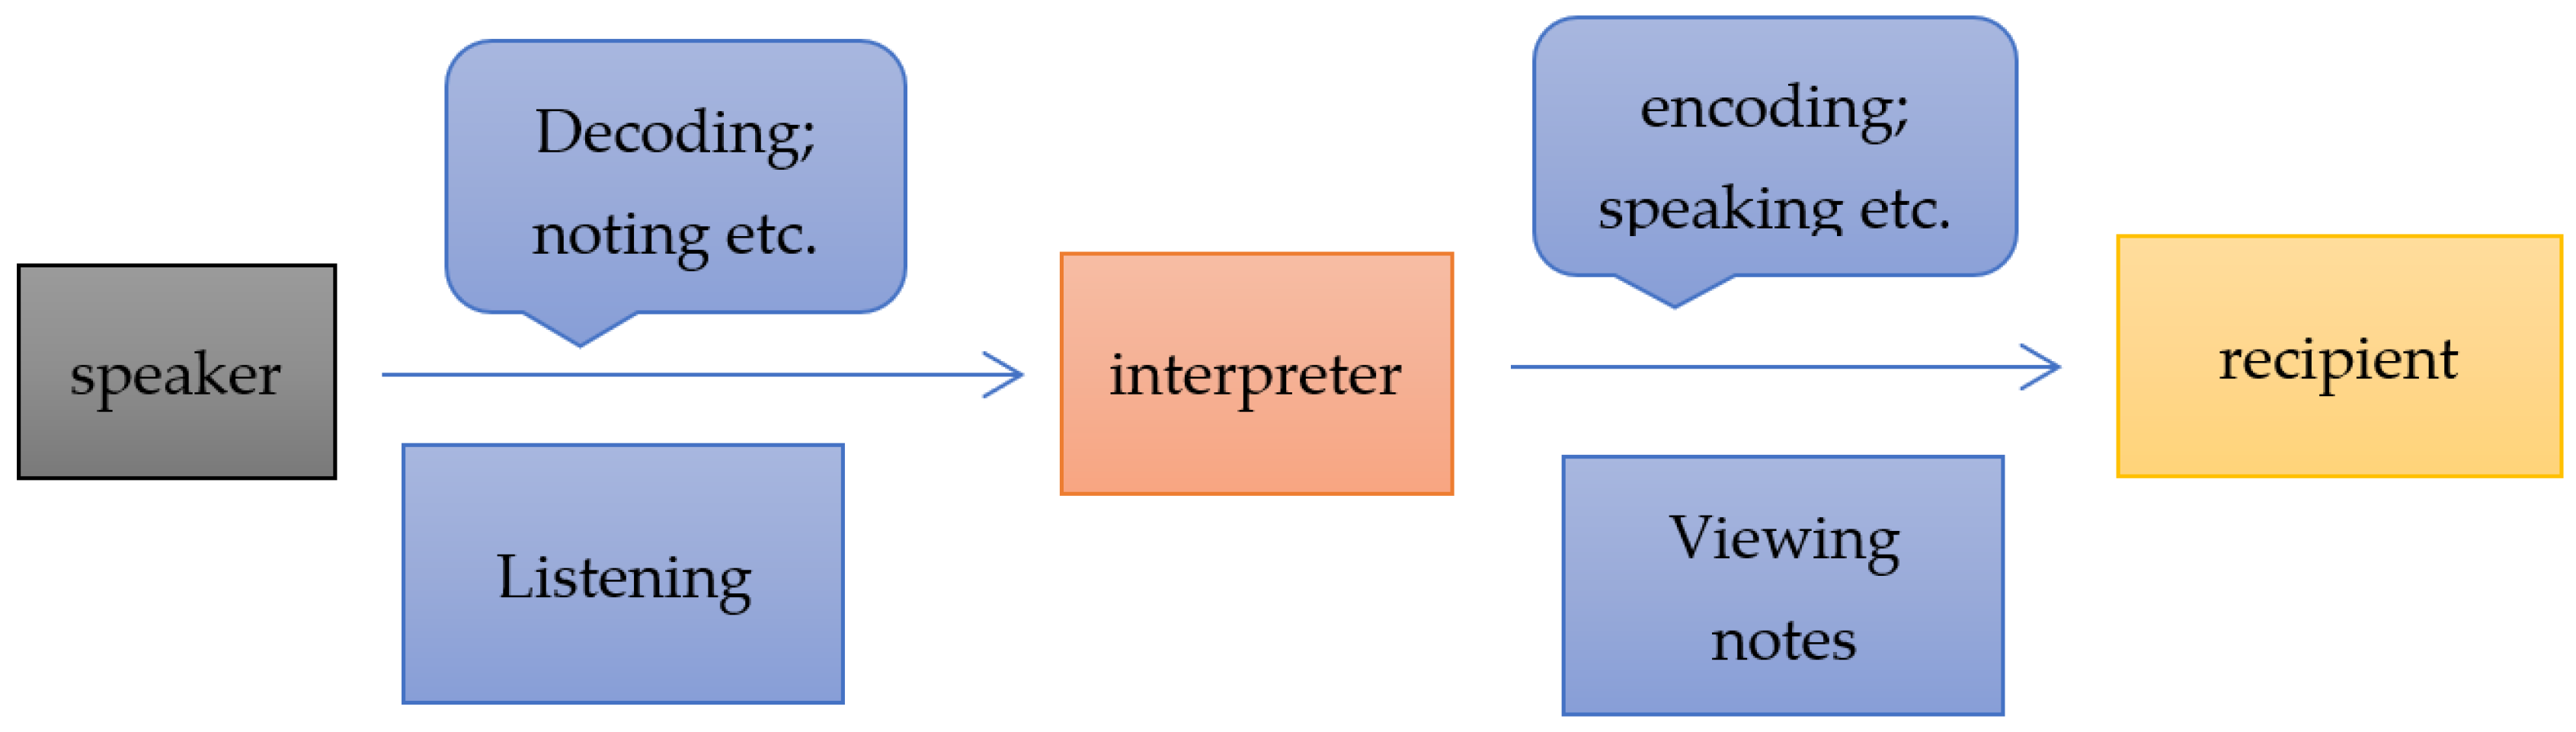 PDF) Effects of directionality on professional translators